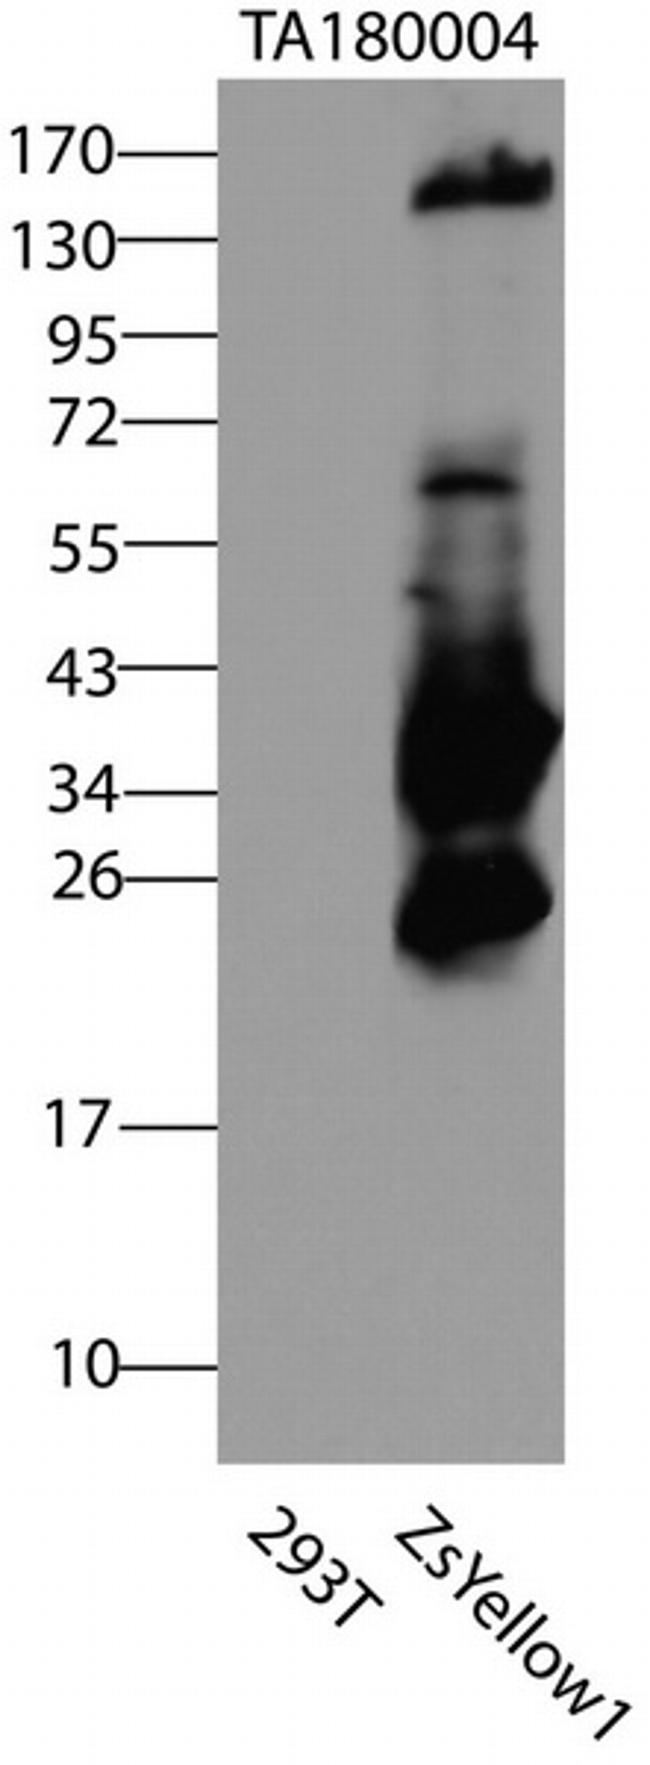 ZsYellow1 Antibody in Western Blot (WB)